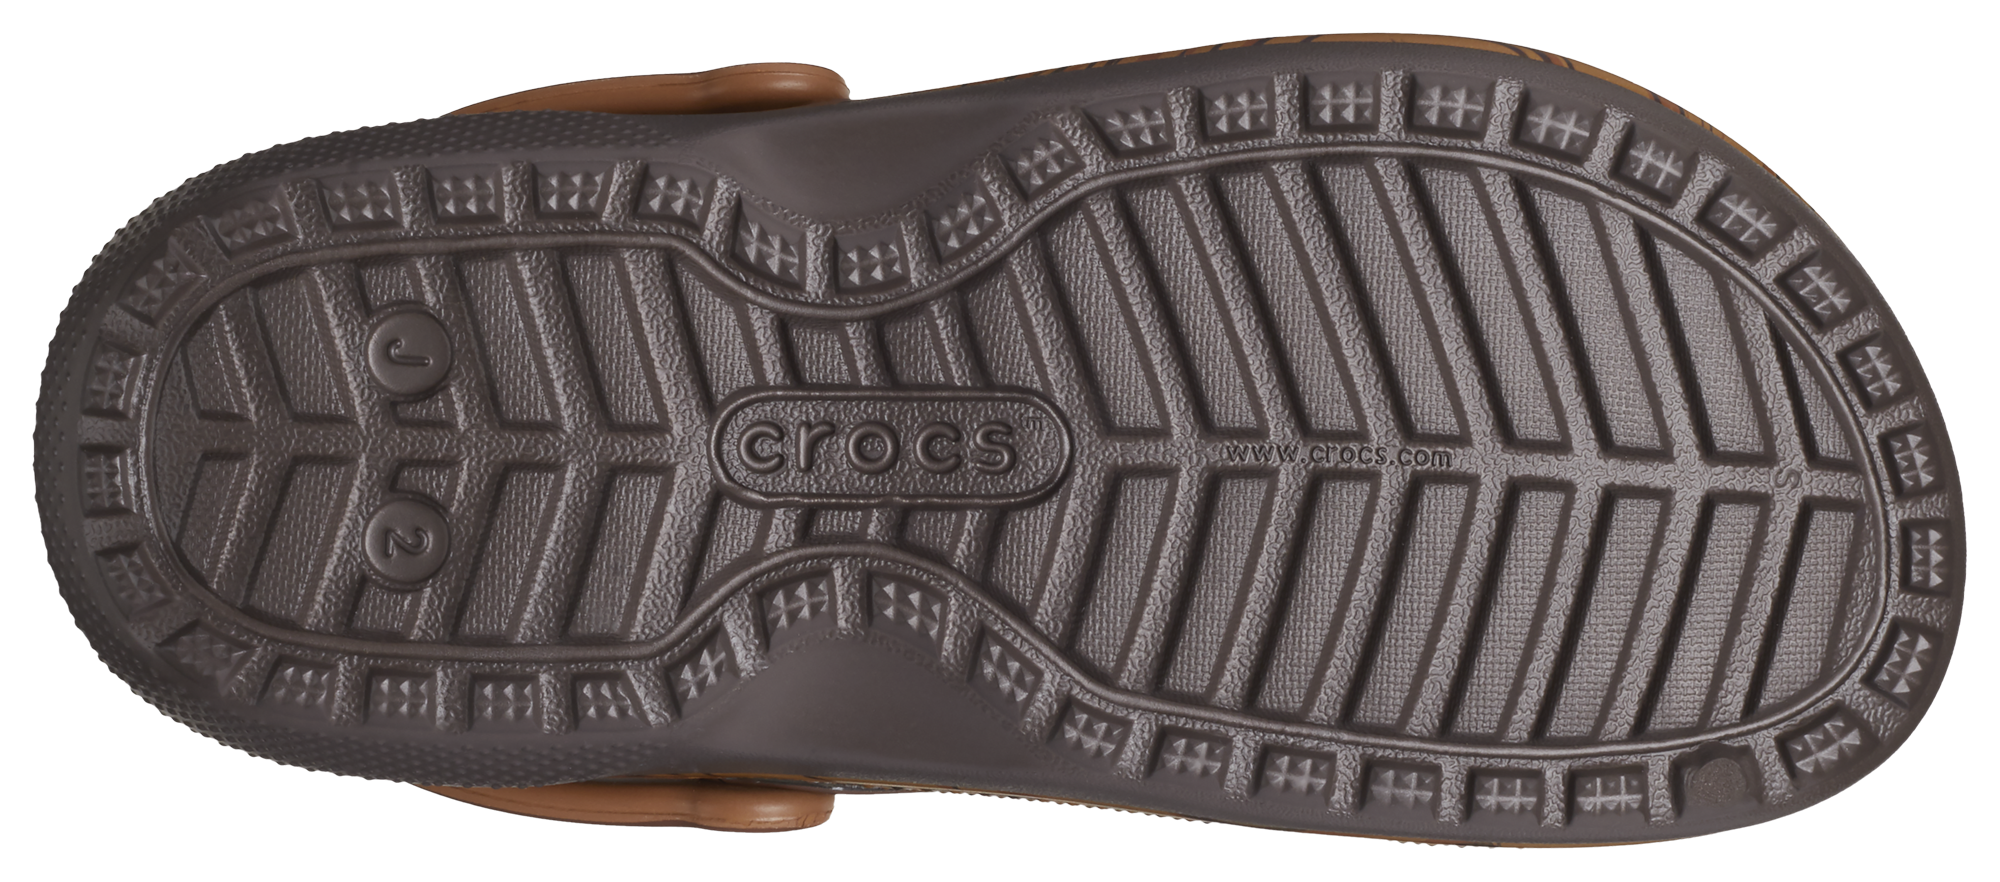 Crocs Star Wars Lined Clogs